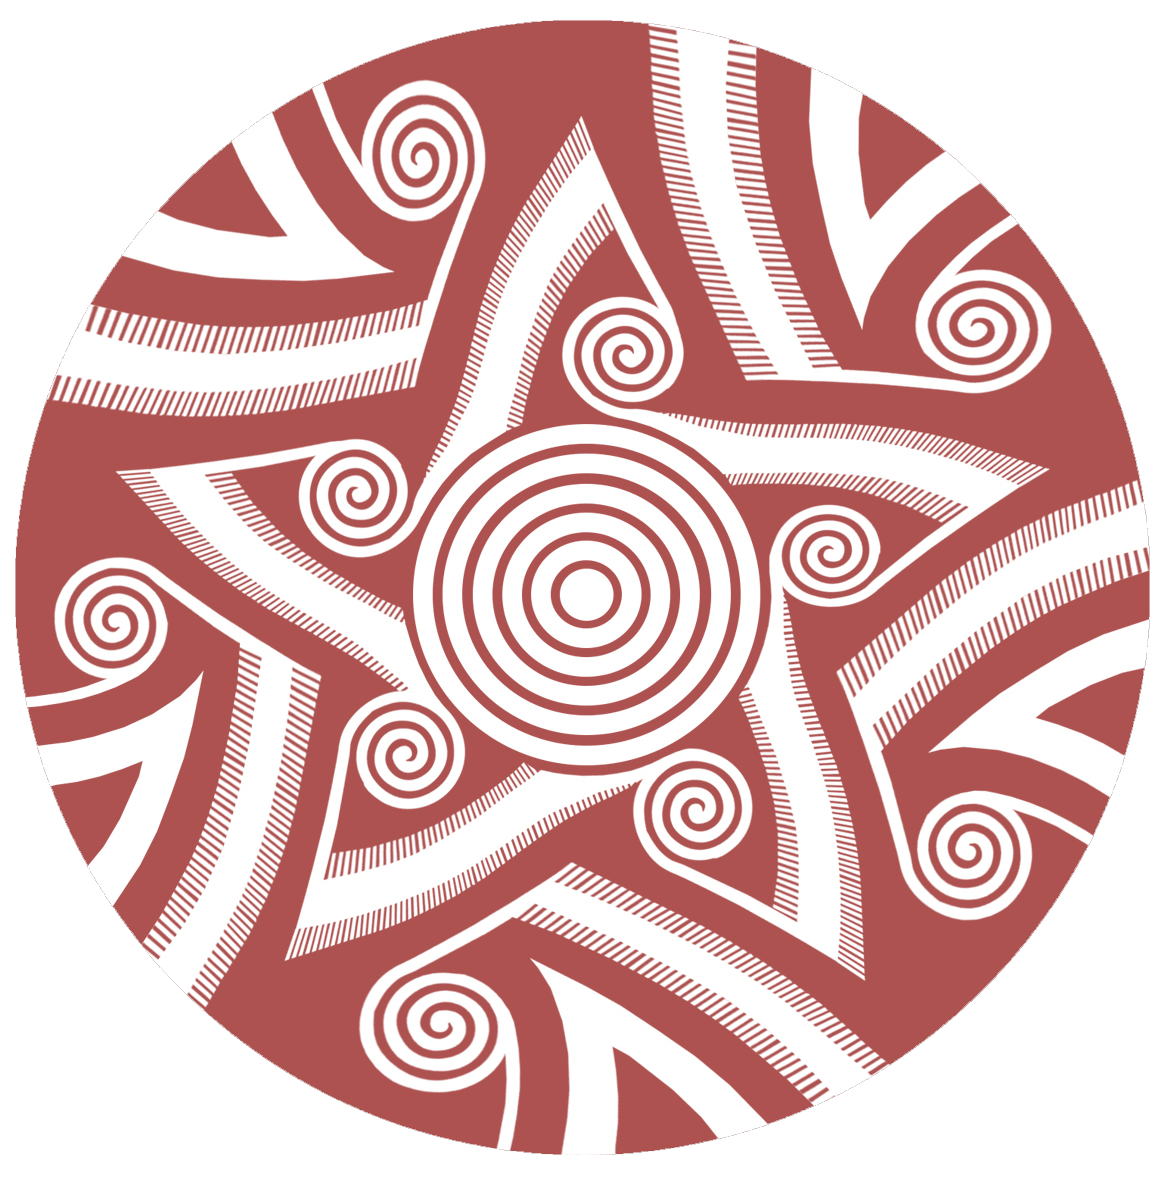 The circular designed logo of Primitive Lifeways